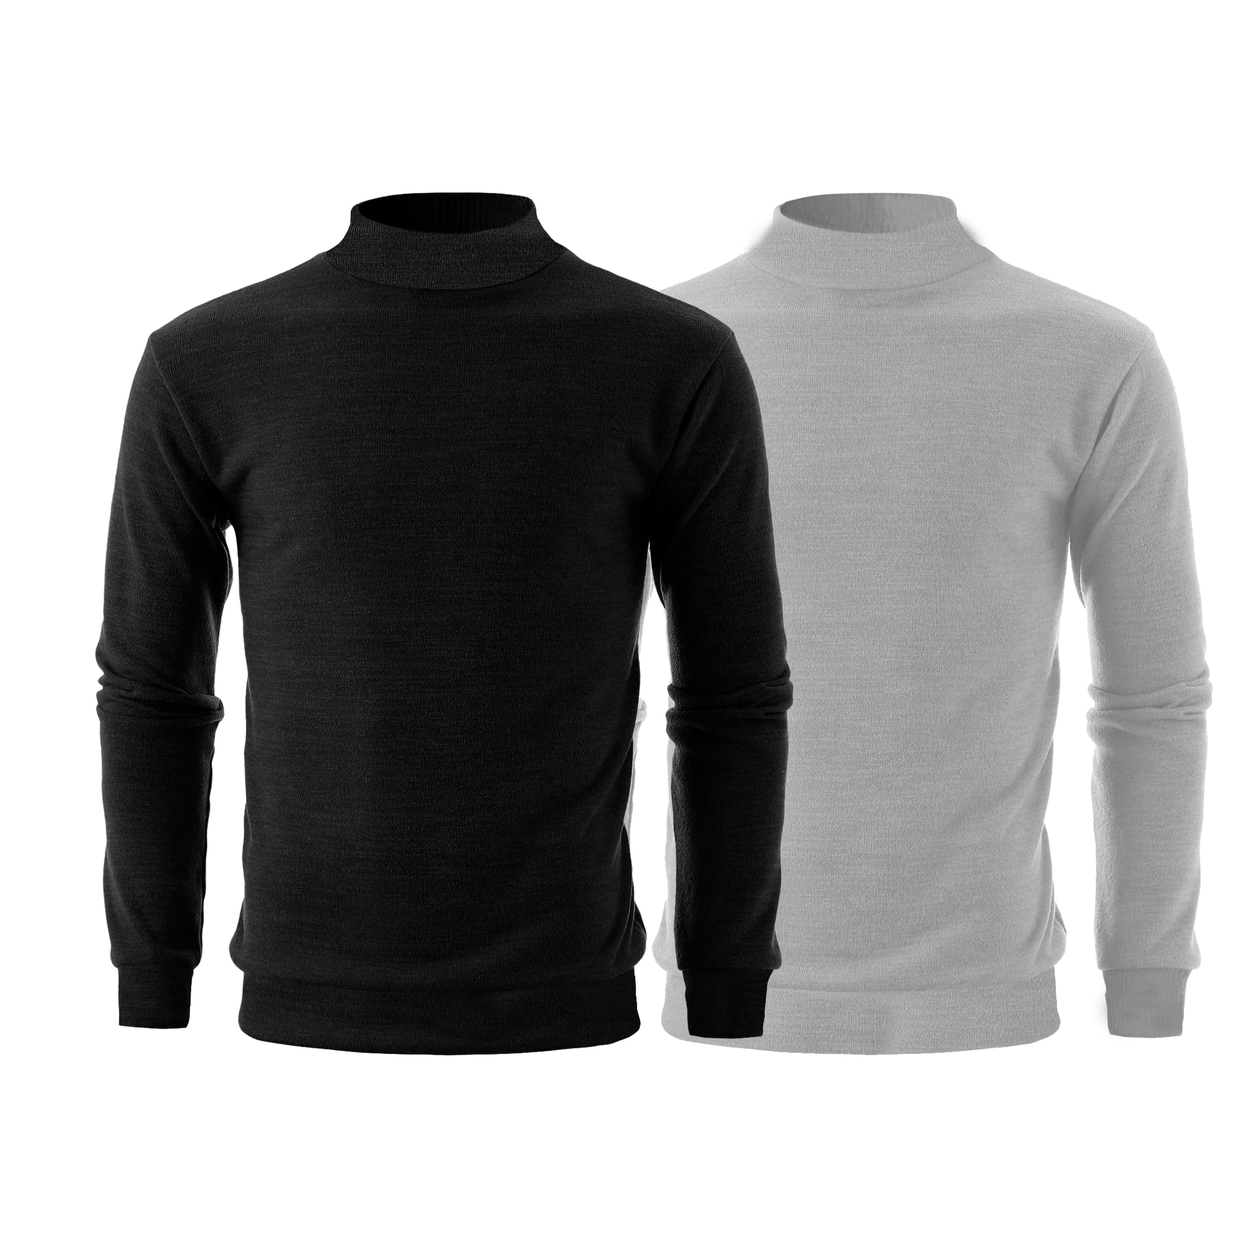 2-Pack: Men's Winter Warm Cozy Knit Slim Fit Mock Neck Sweater - Black & Charcoal, Xx-large